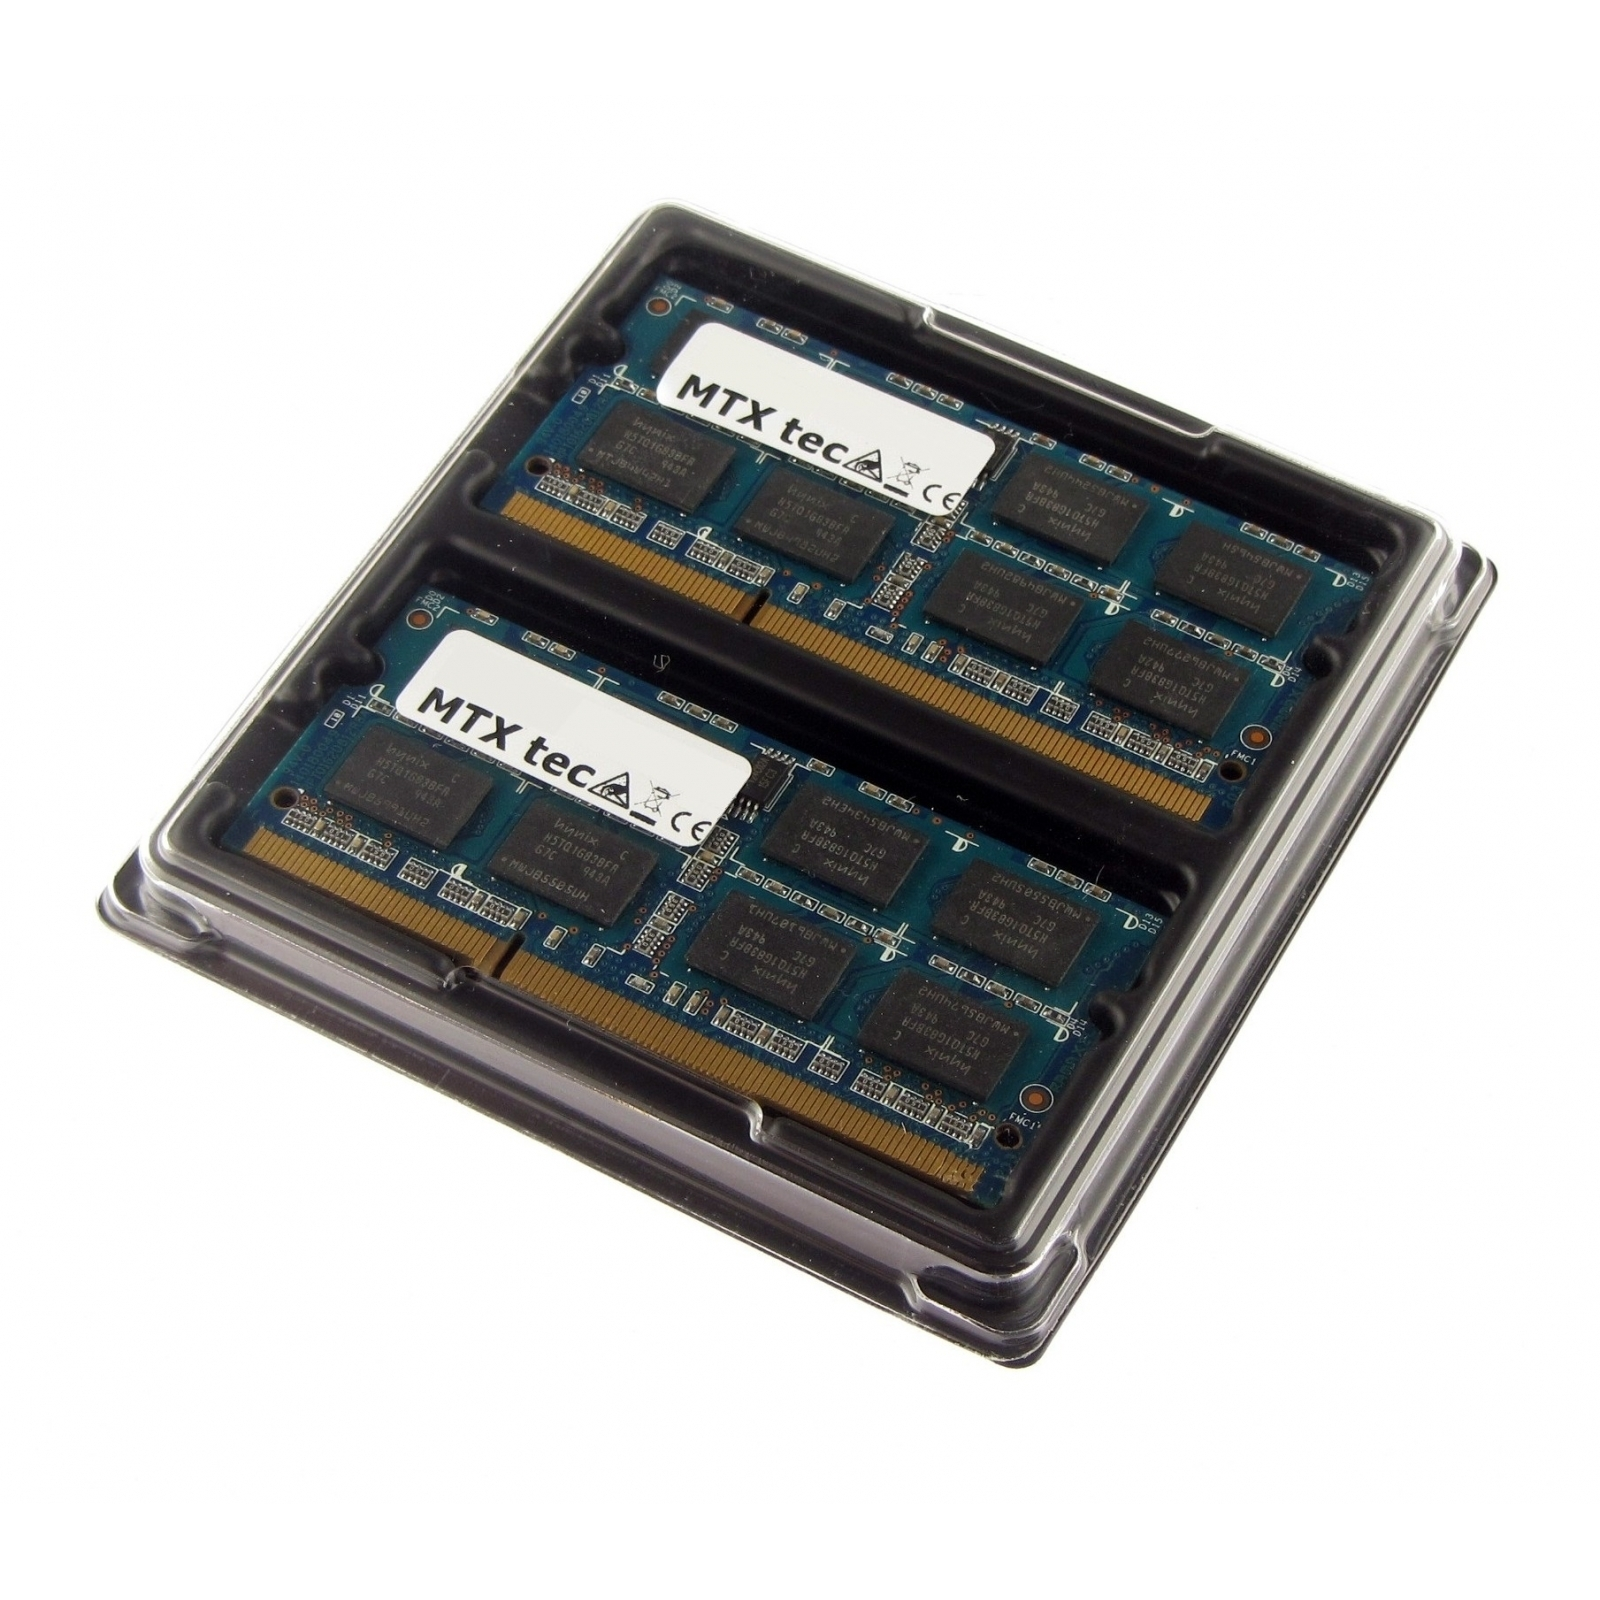 MTXTEC 4GB Kit 204 Notebook-Speicher SODIMM 2 DDR3 RAM GB DDR3 Pin PC3-8500, 2x 2GB DDR3 Laptop-Speicher 1066MHz